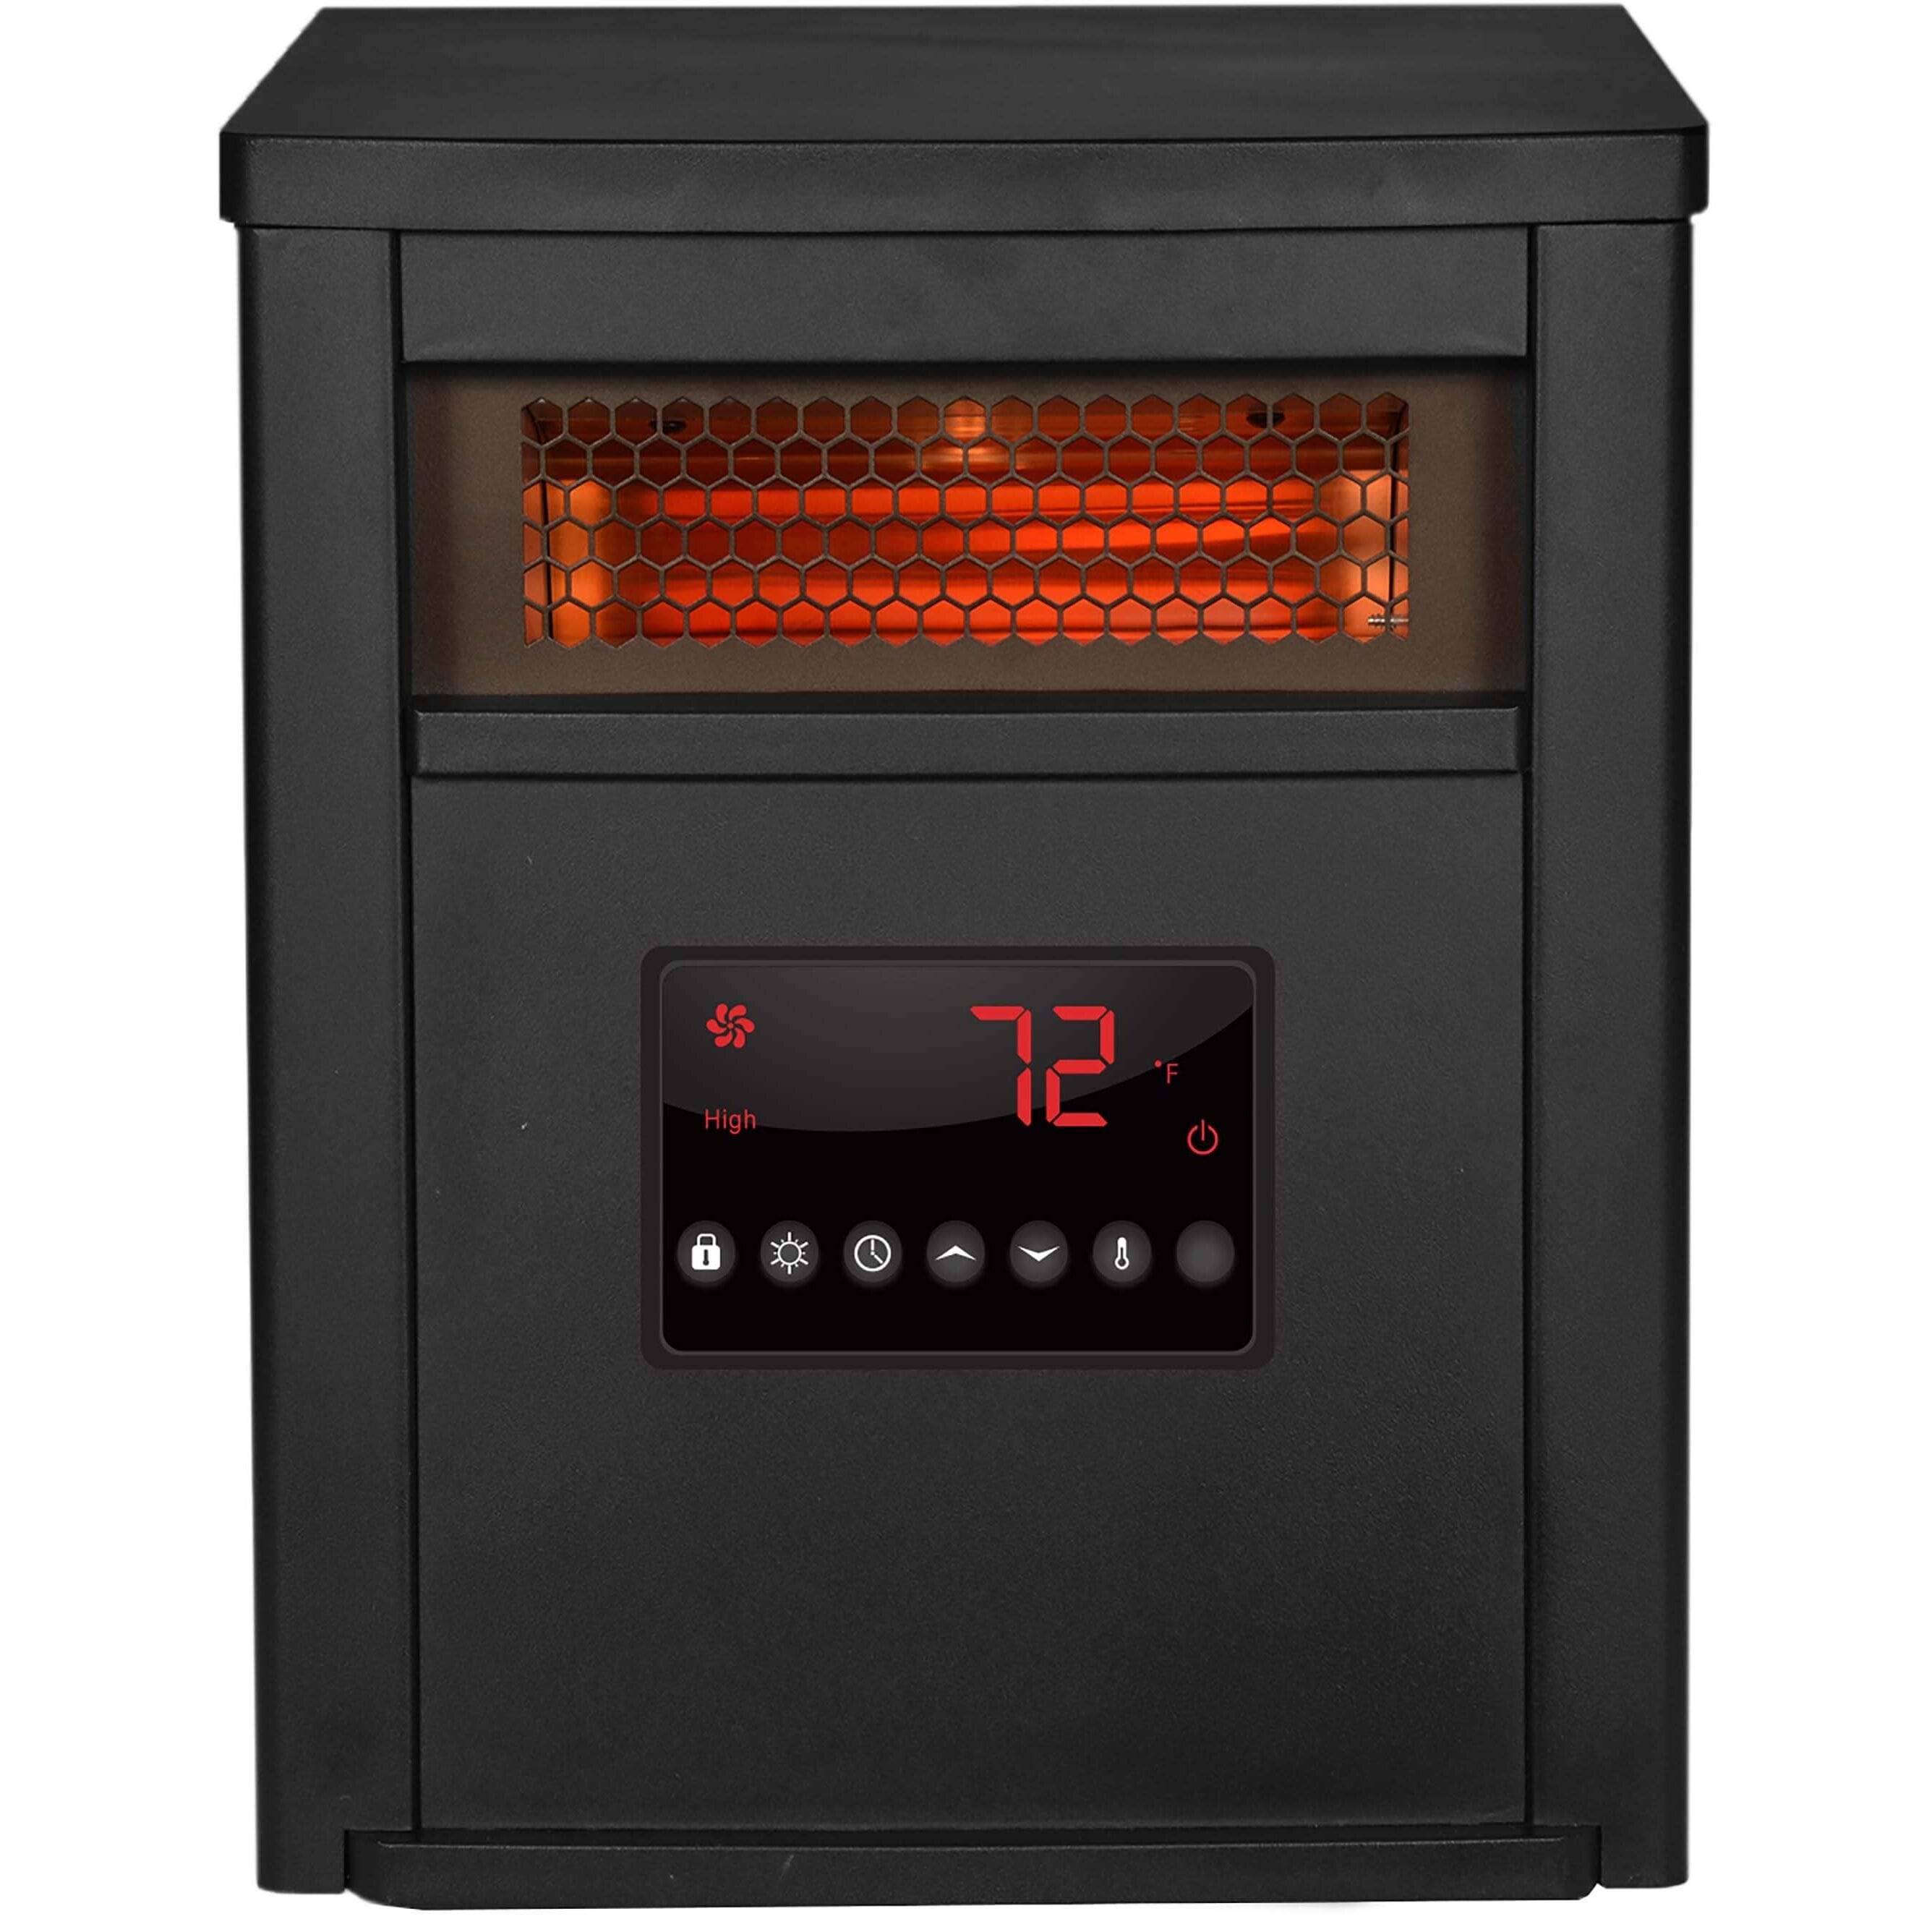 LifeSmart Infrared Heater LifeSmart 6-Element Infrared Heater with Black Steel Cabinet